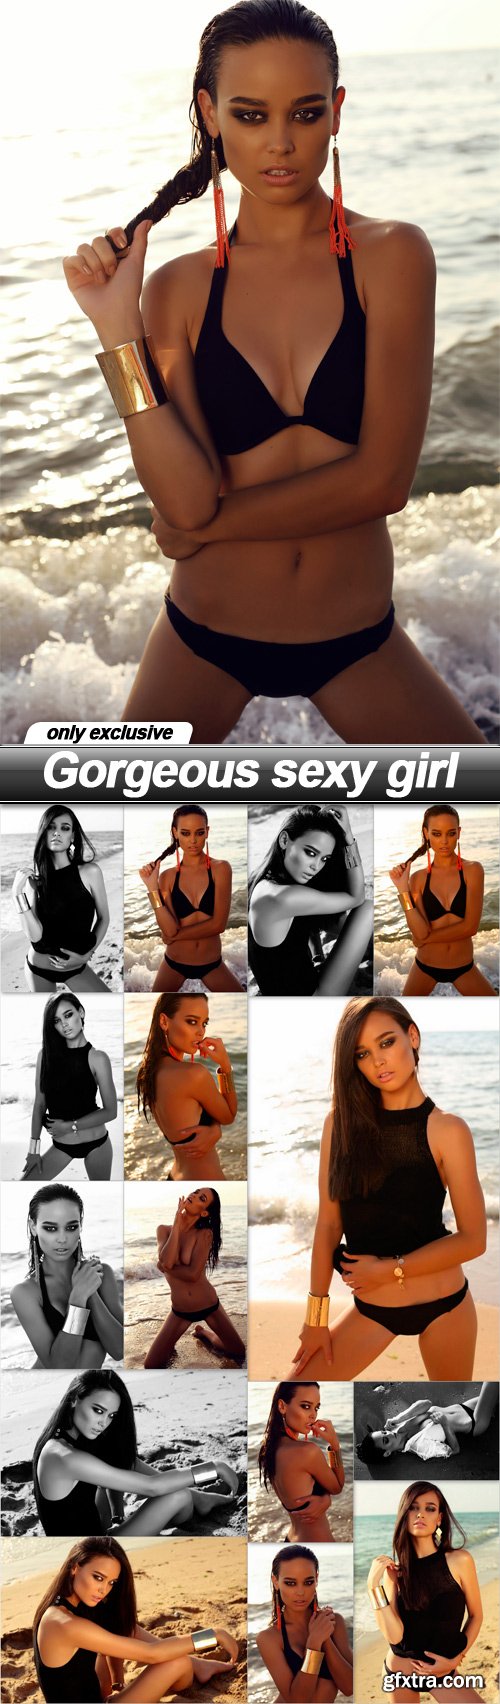 Gorgeous sexy girl - 15 UHQ JPEG